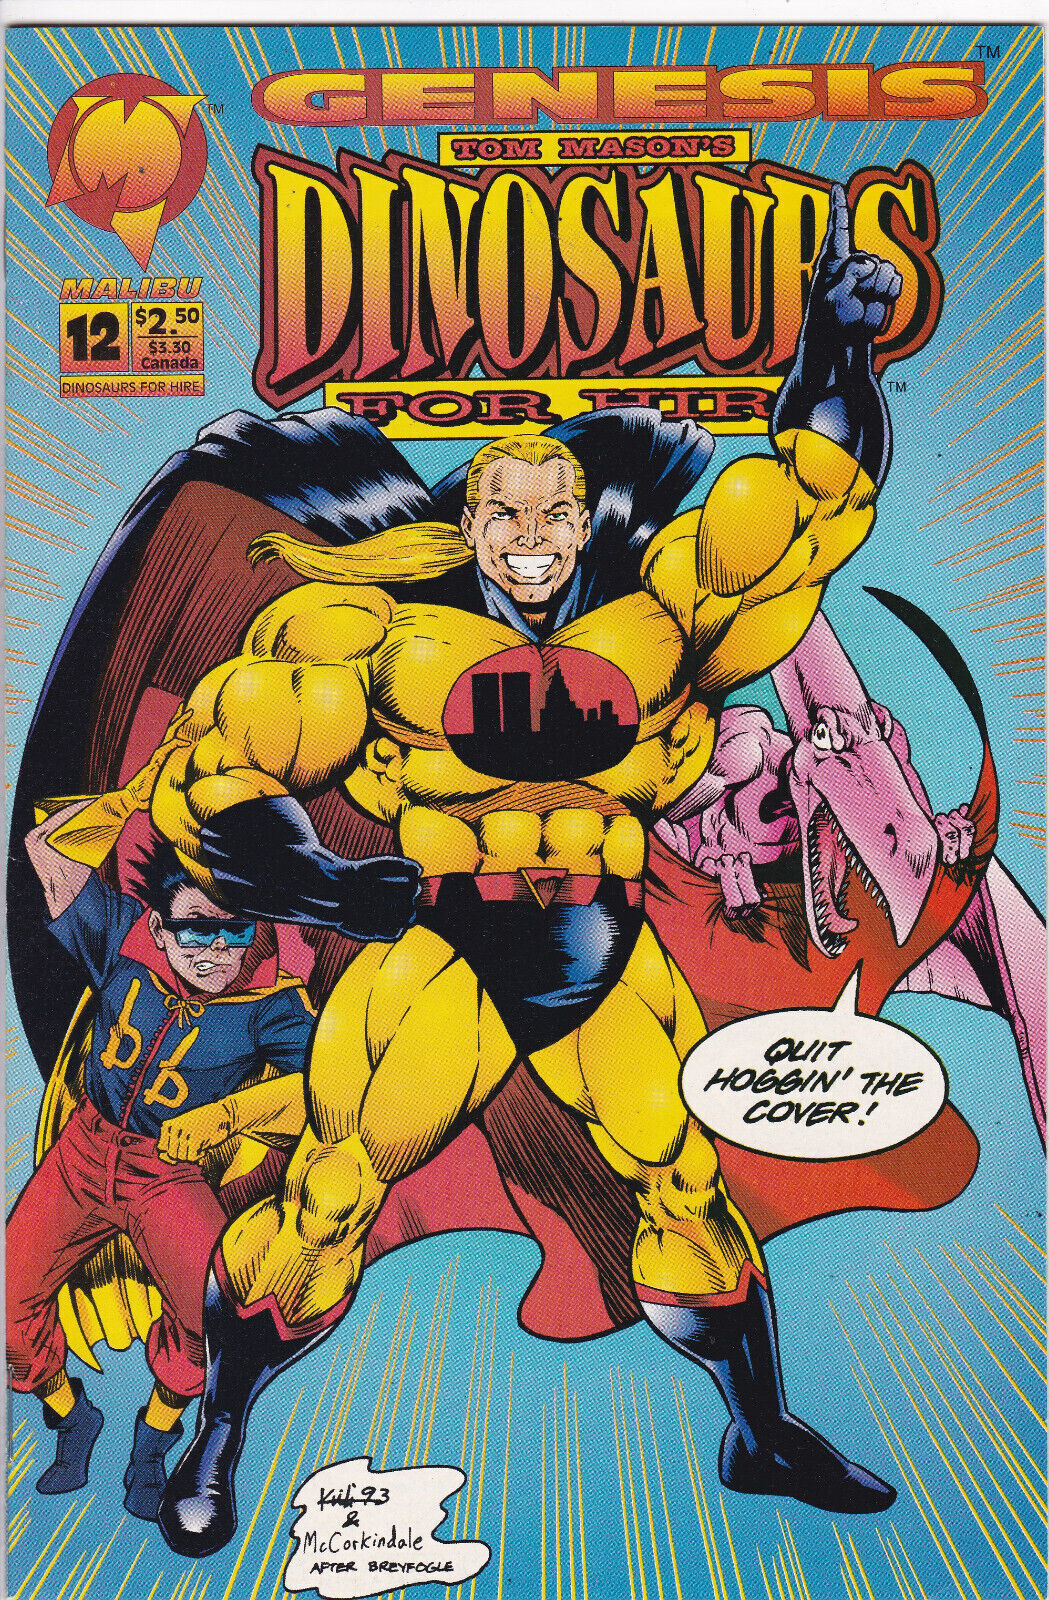 Dinosaurs for Hire #12, Vol. 2 (1993-1994) Malibu Comics, High Grade